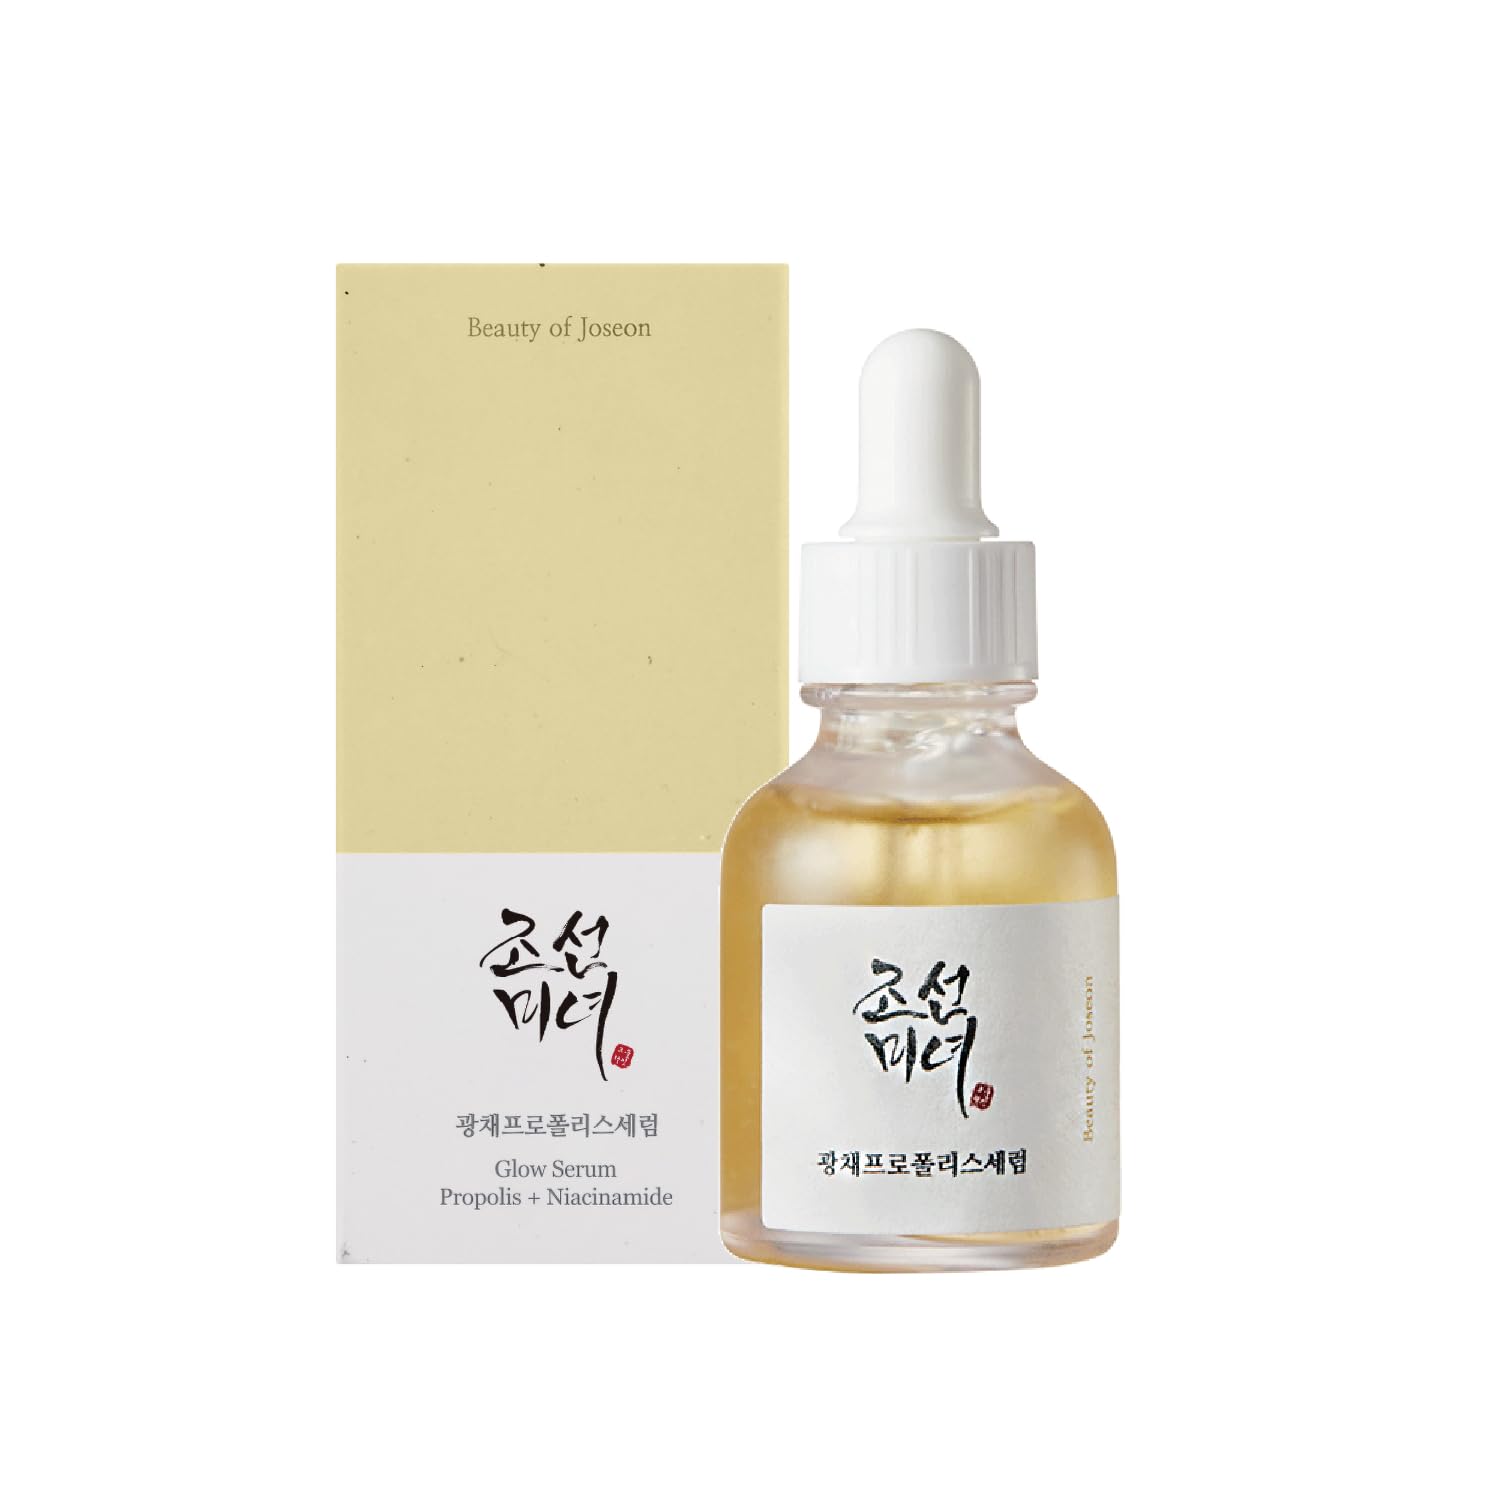 Beauty of Joseon Glow Serum Propolis and Niacinamide Kbeauty Hydrating Facial Serum Korean Moisturizer Glow Up, Uneven Skin Tone Korean Skin Care 30ml